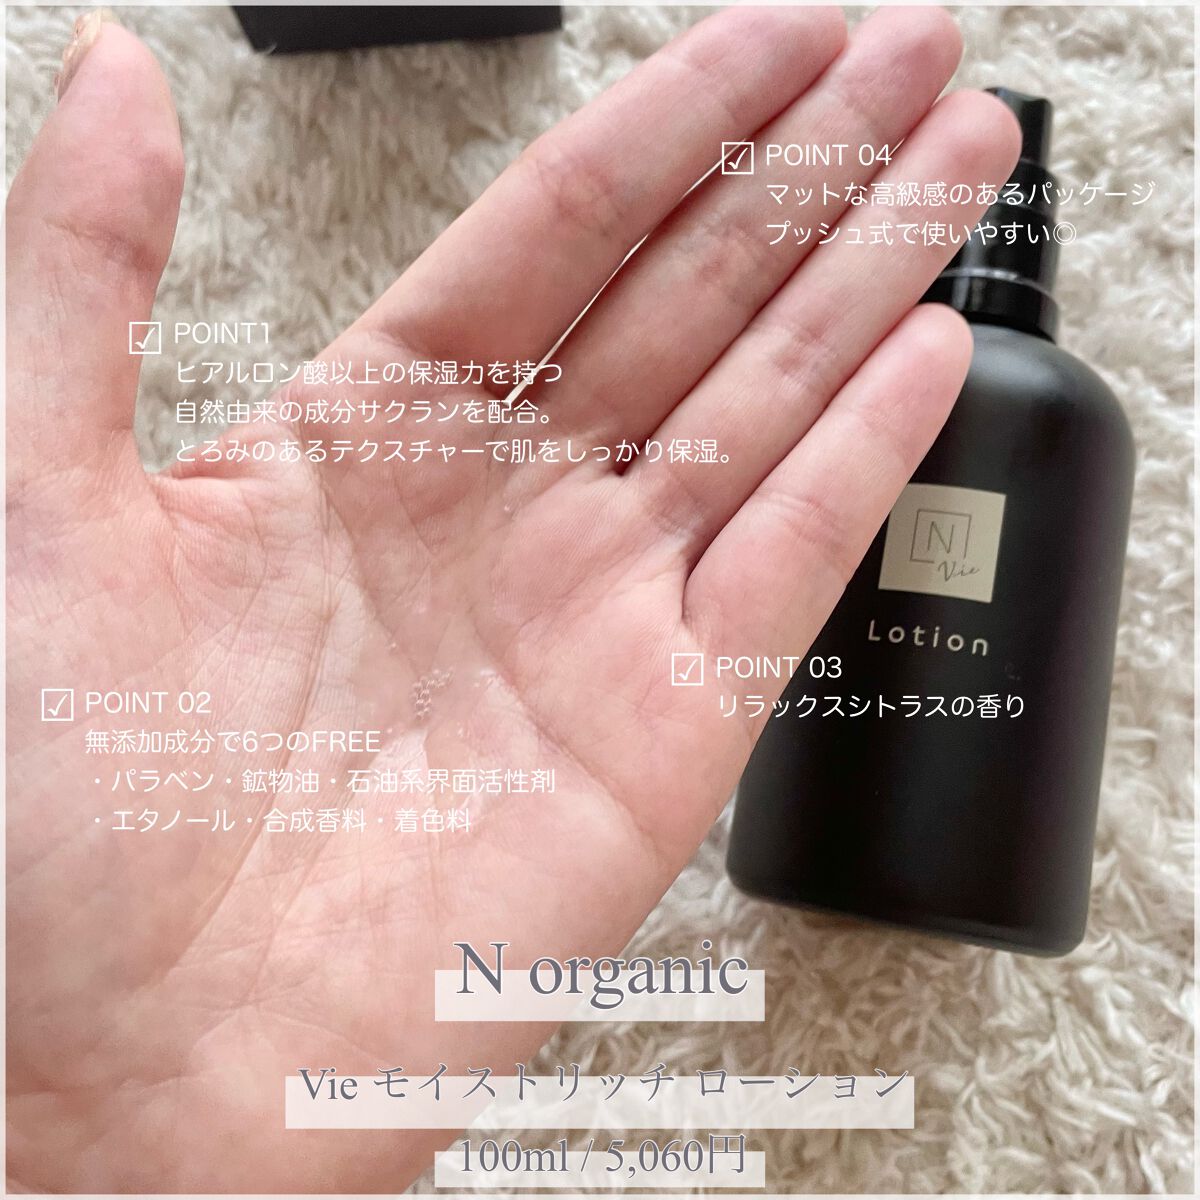 N organic Vieモイストリッチローション【化粧水】